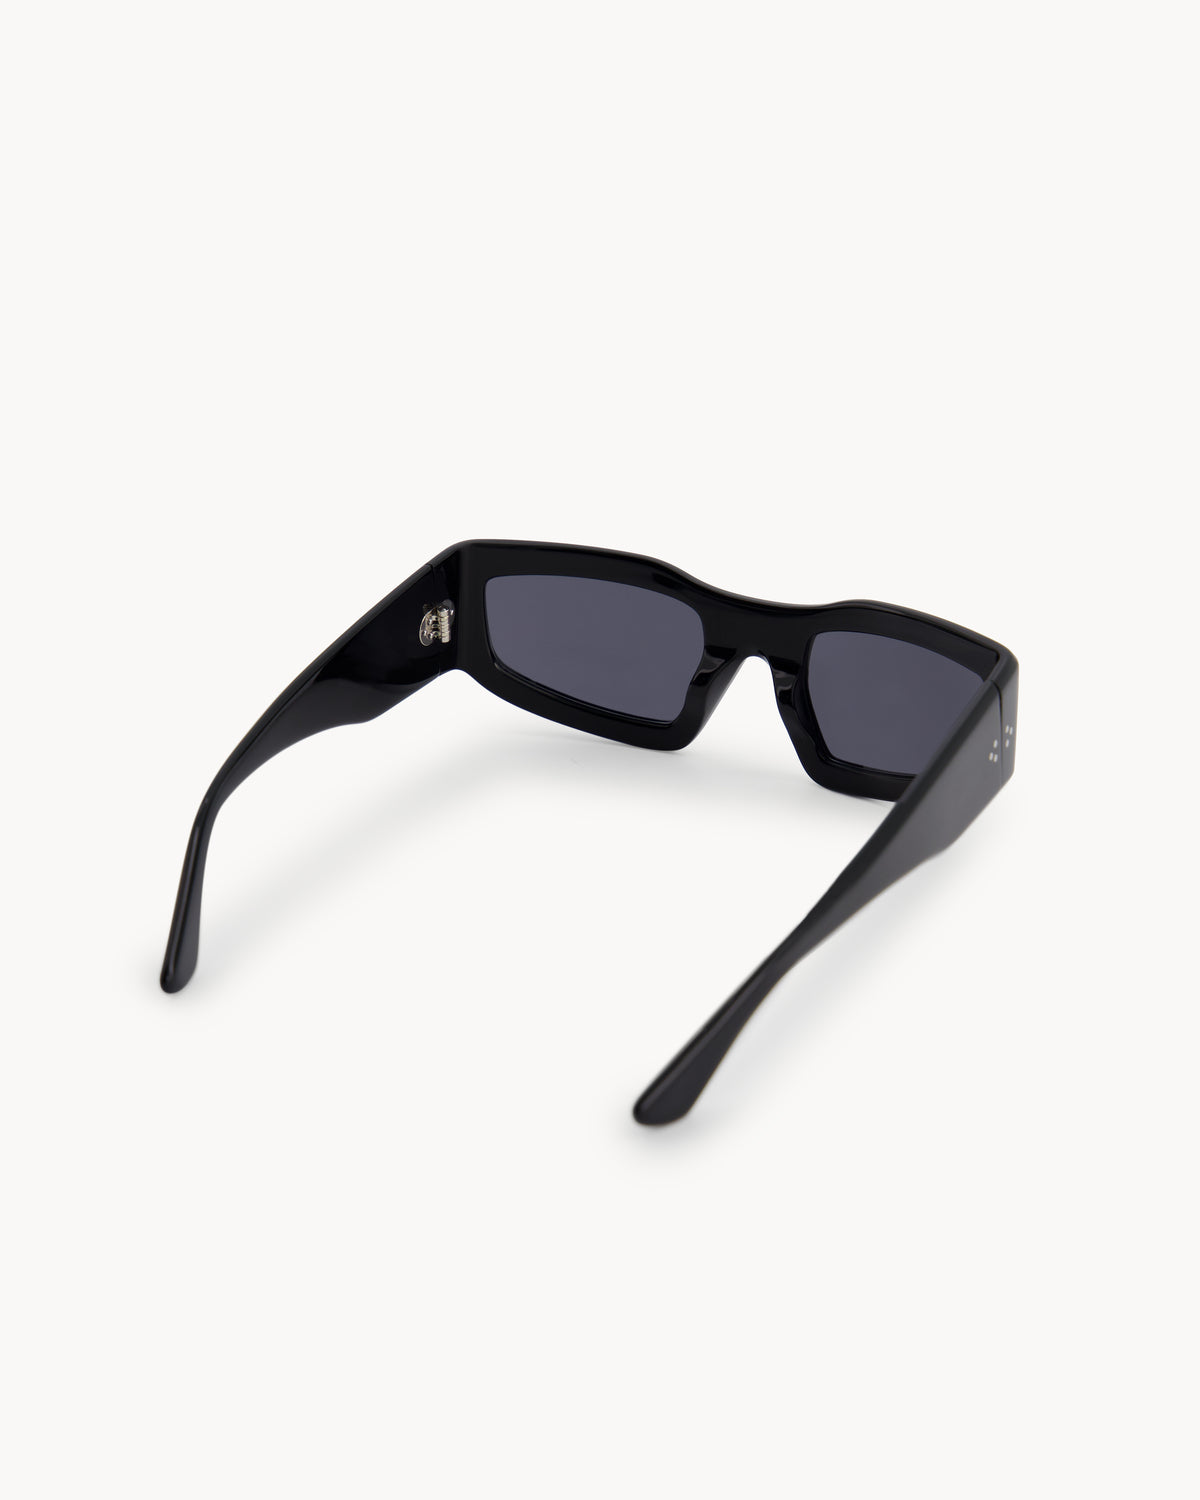 Port Tanger Andalucia Sunglasses in Black Acetate and Black Lenses 3